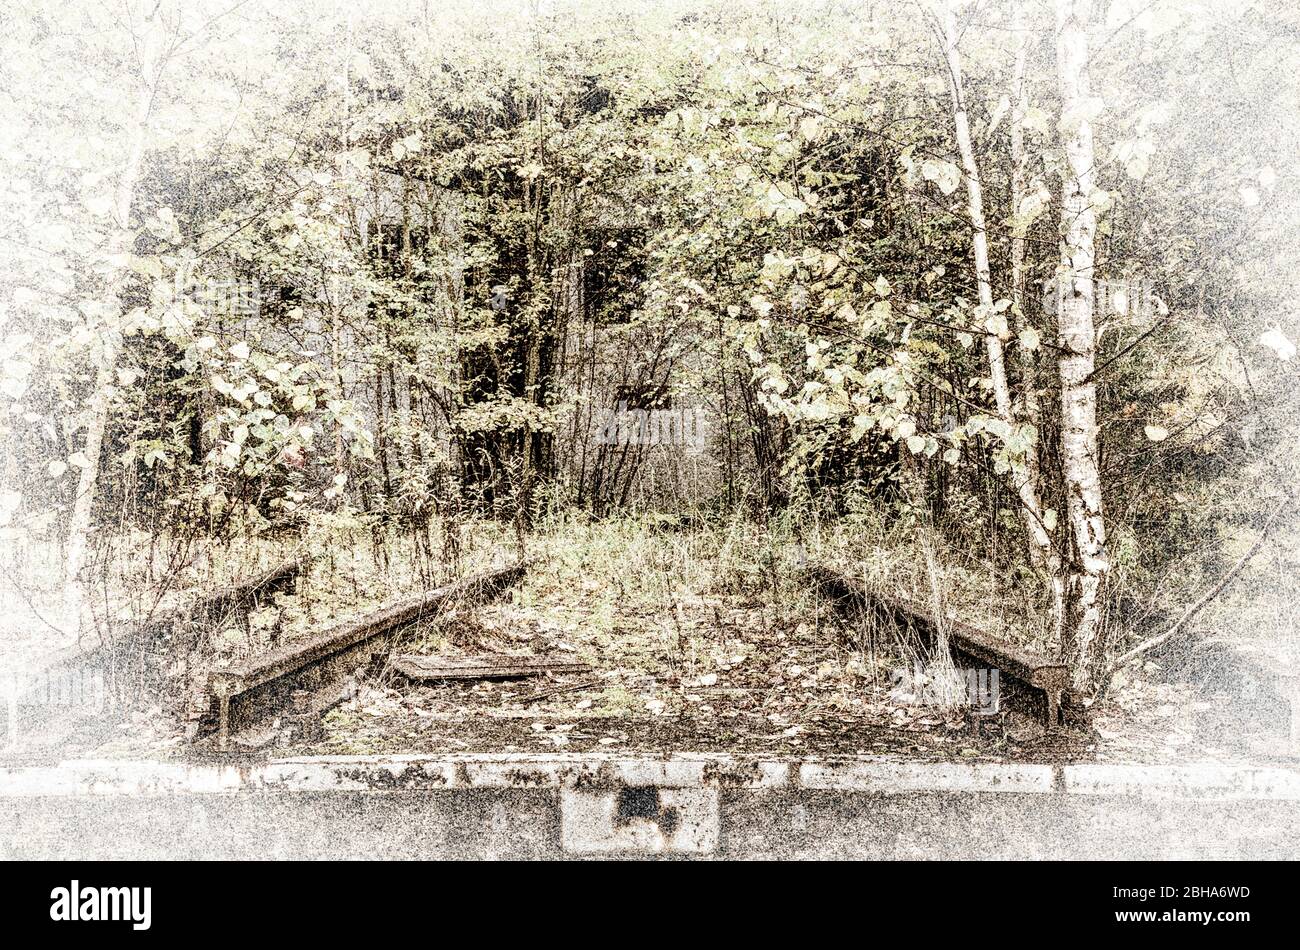 Railways, shingles, bushes, trees, digitally processed, RailArt Stock Photo